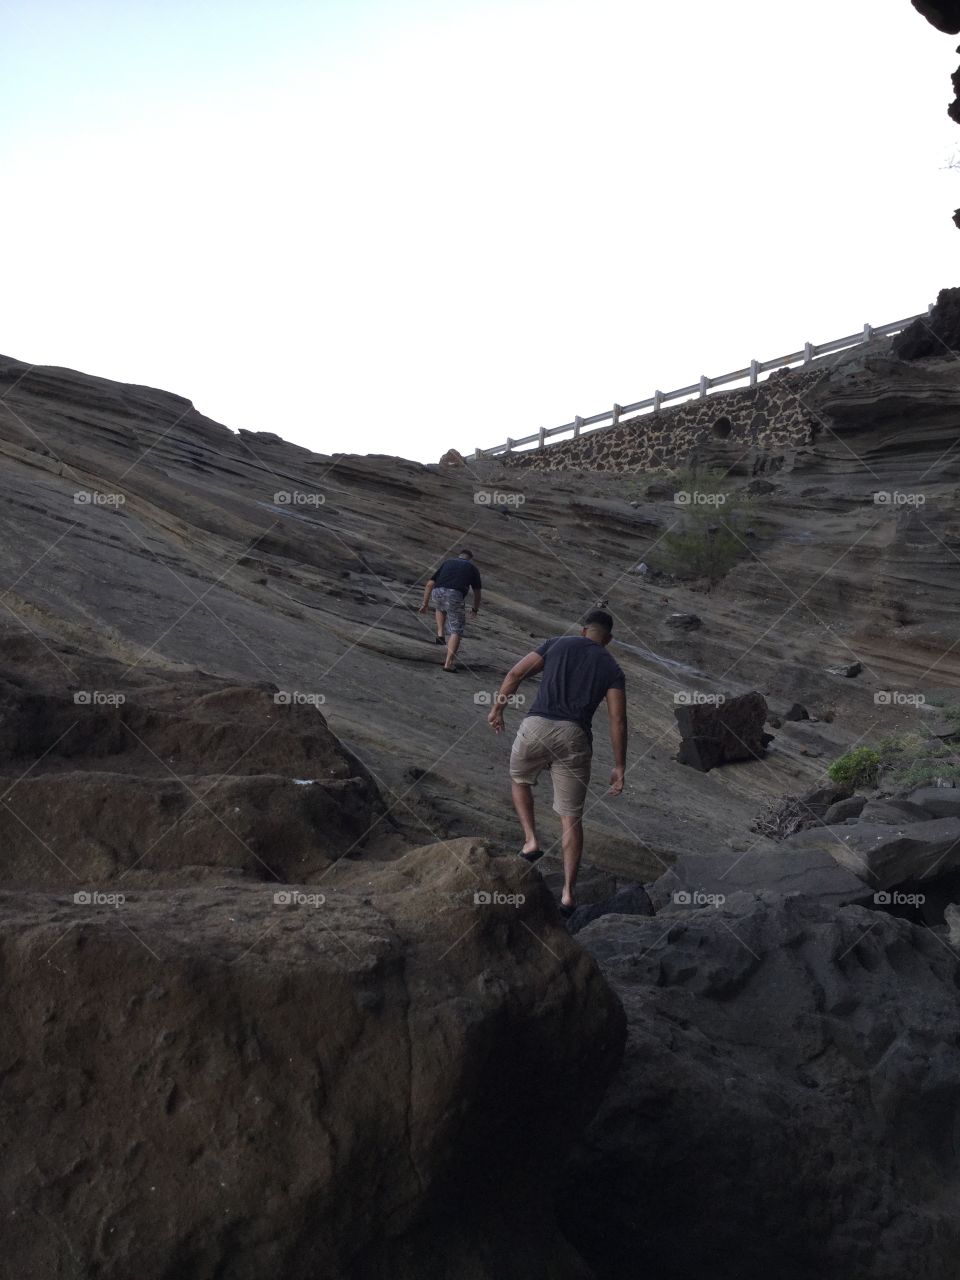 Climbing back up the cliffs